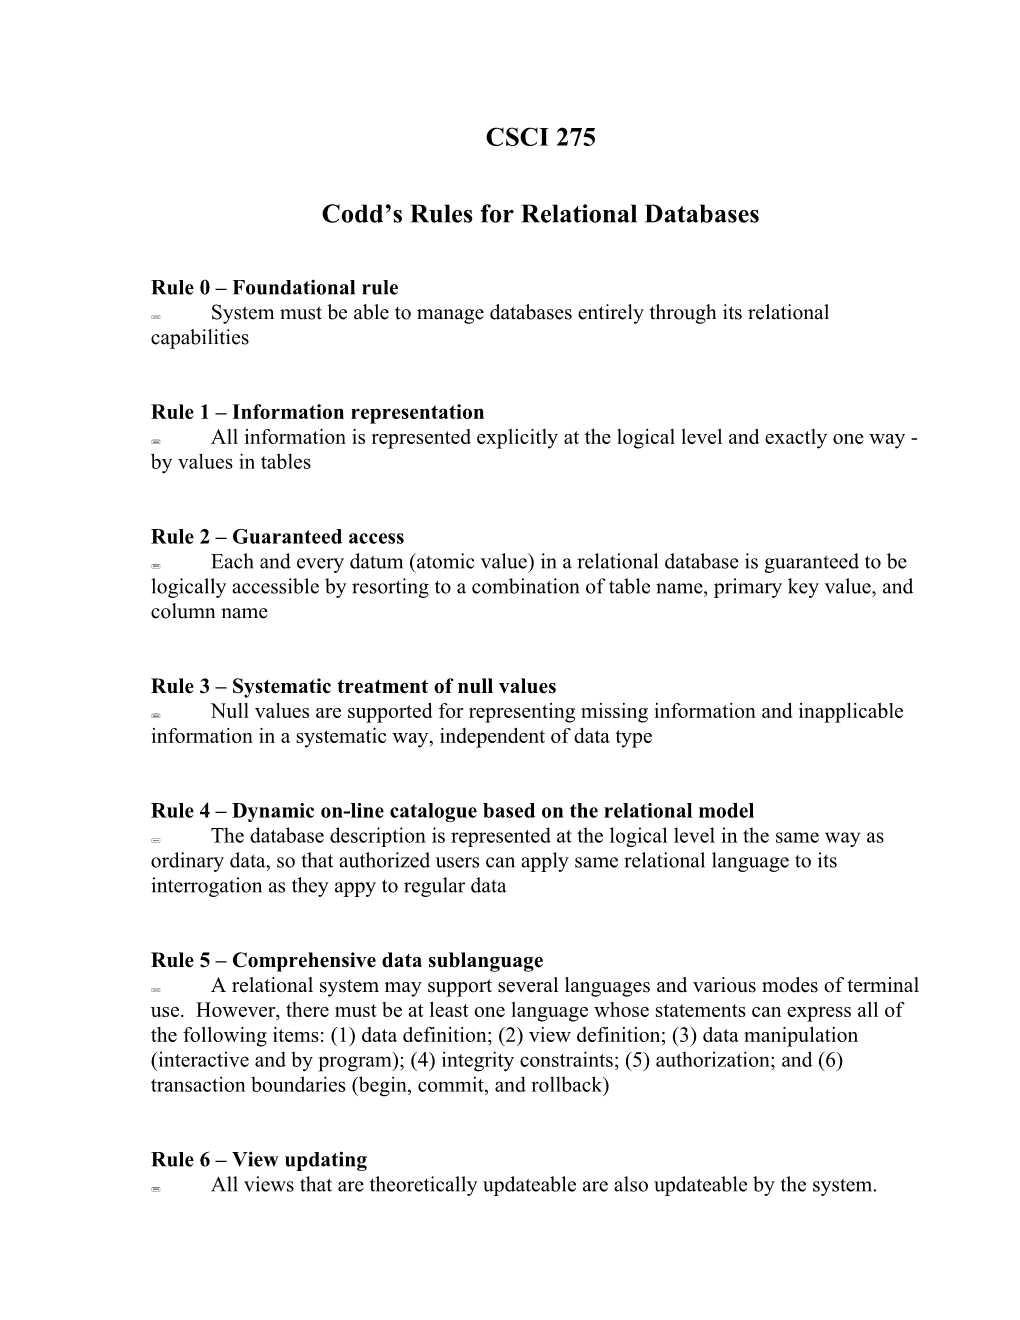 Codd S Rules for Relational Databases